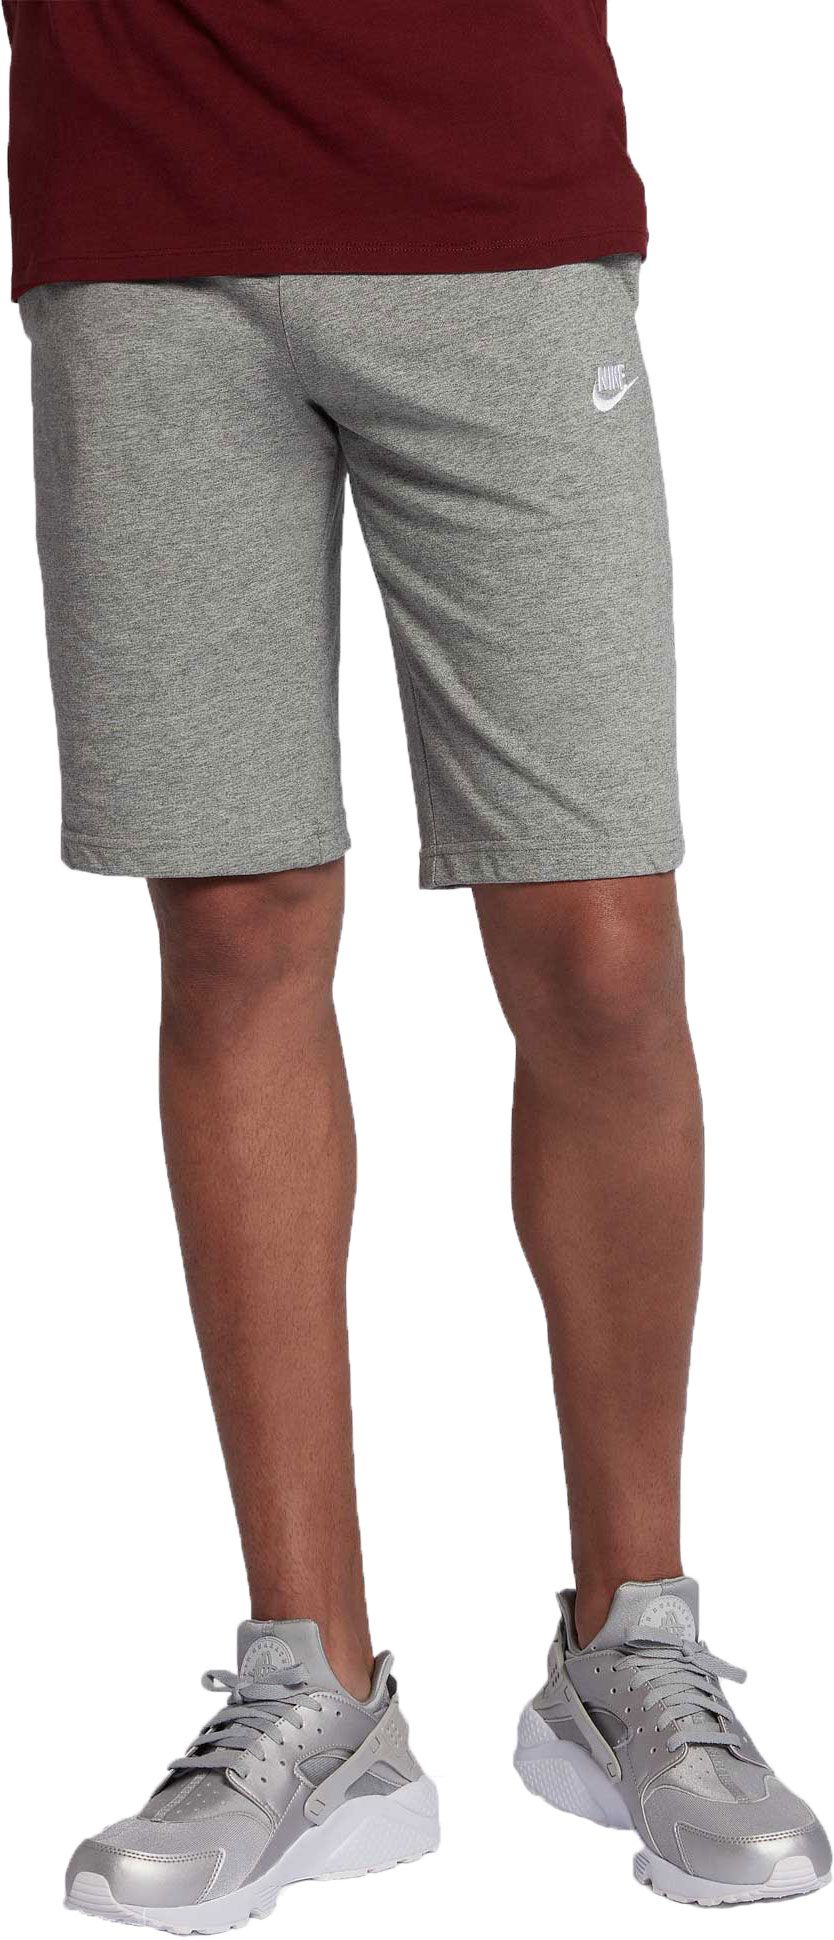 nike sweatpants shorts mens